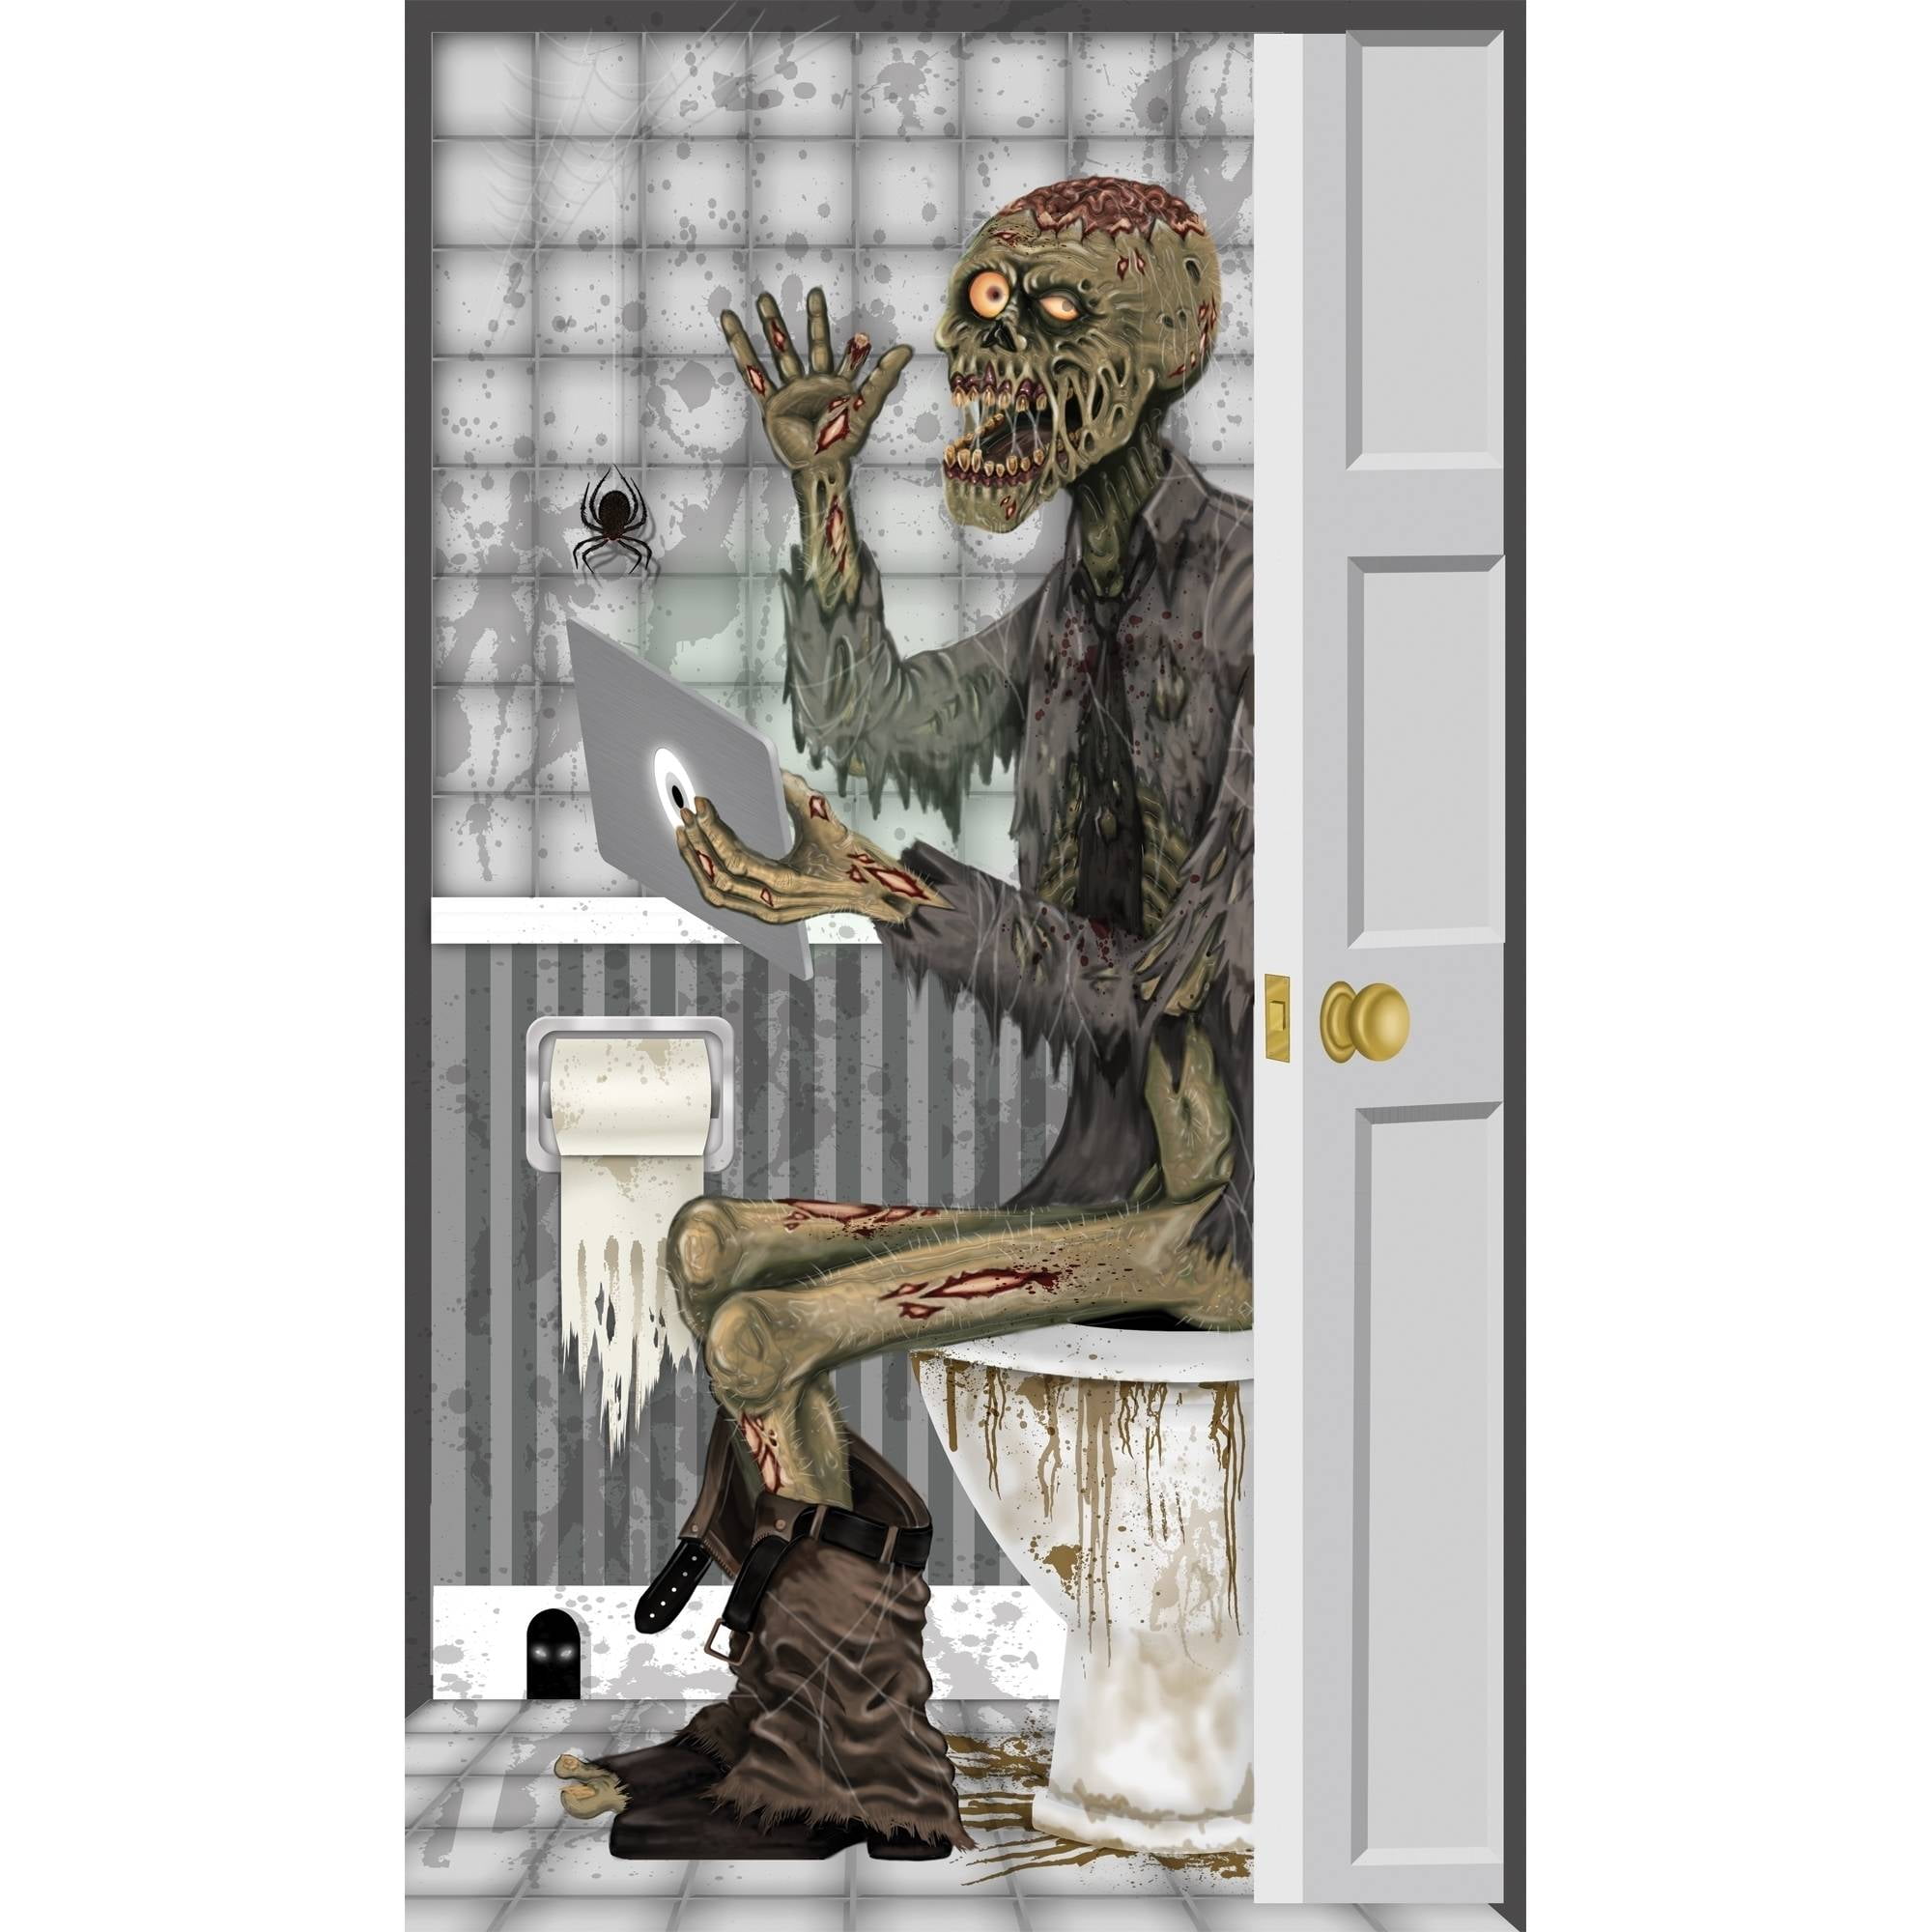 Skeleton Sitting on Toilet Door Cover Wall Scene Setter Ghostly Halloween Prop 